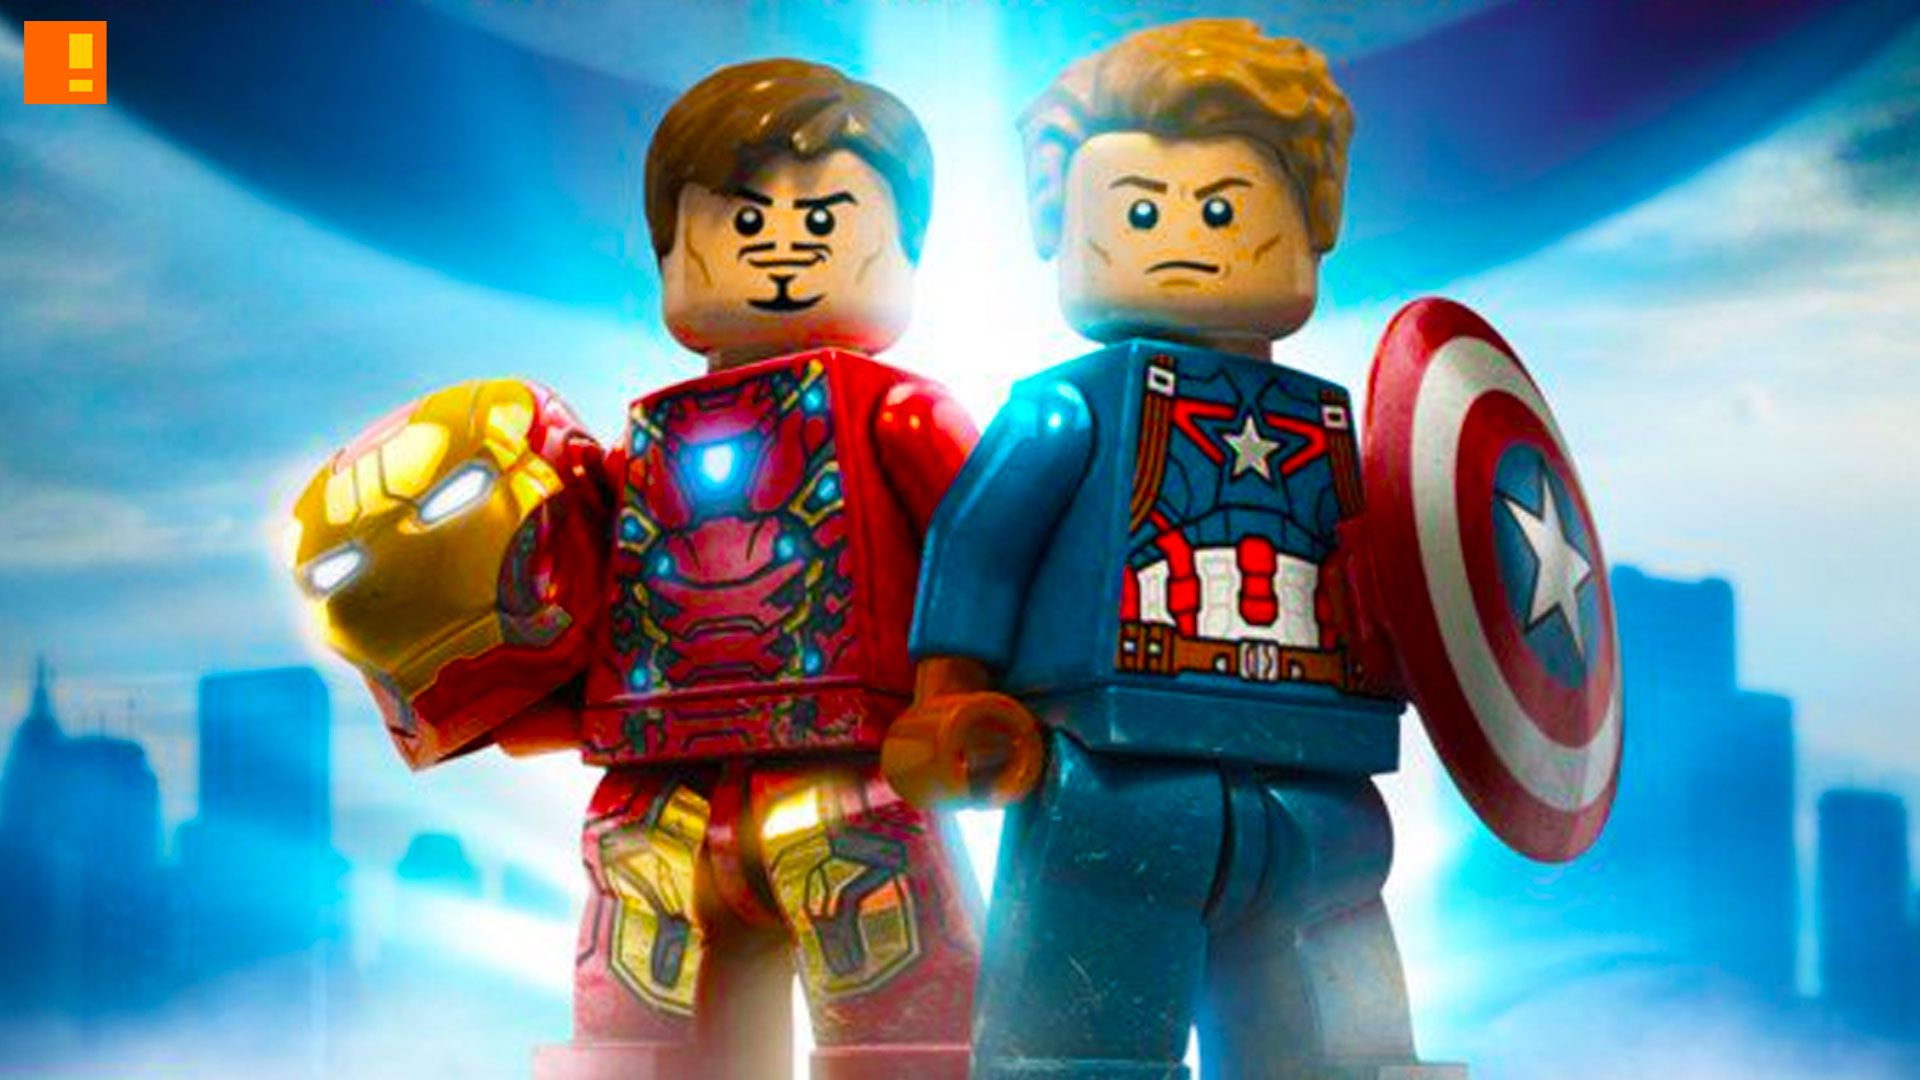 LEGO Marvel's Avengers” debuts “Civil War” Characters via DLC